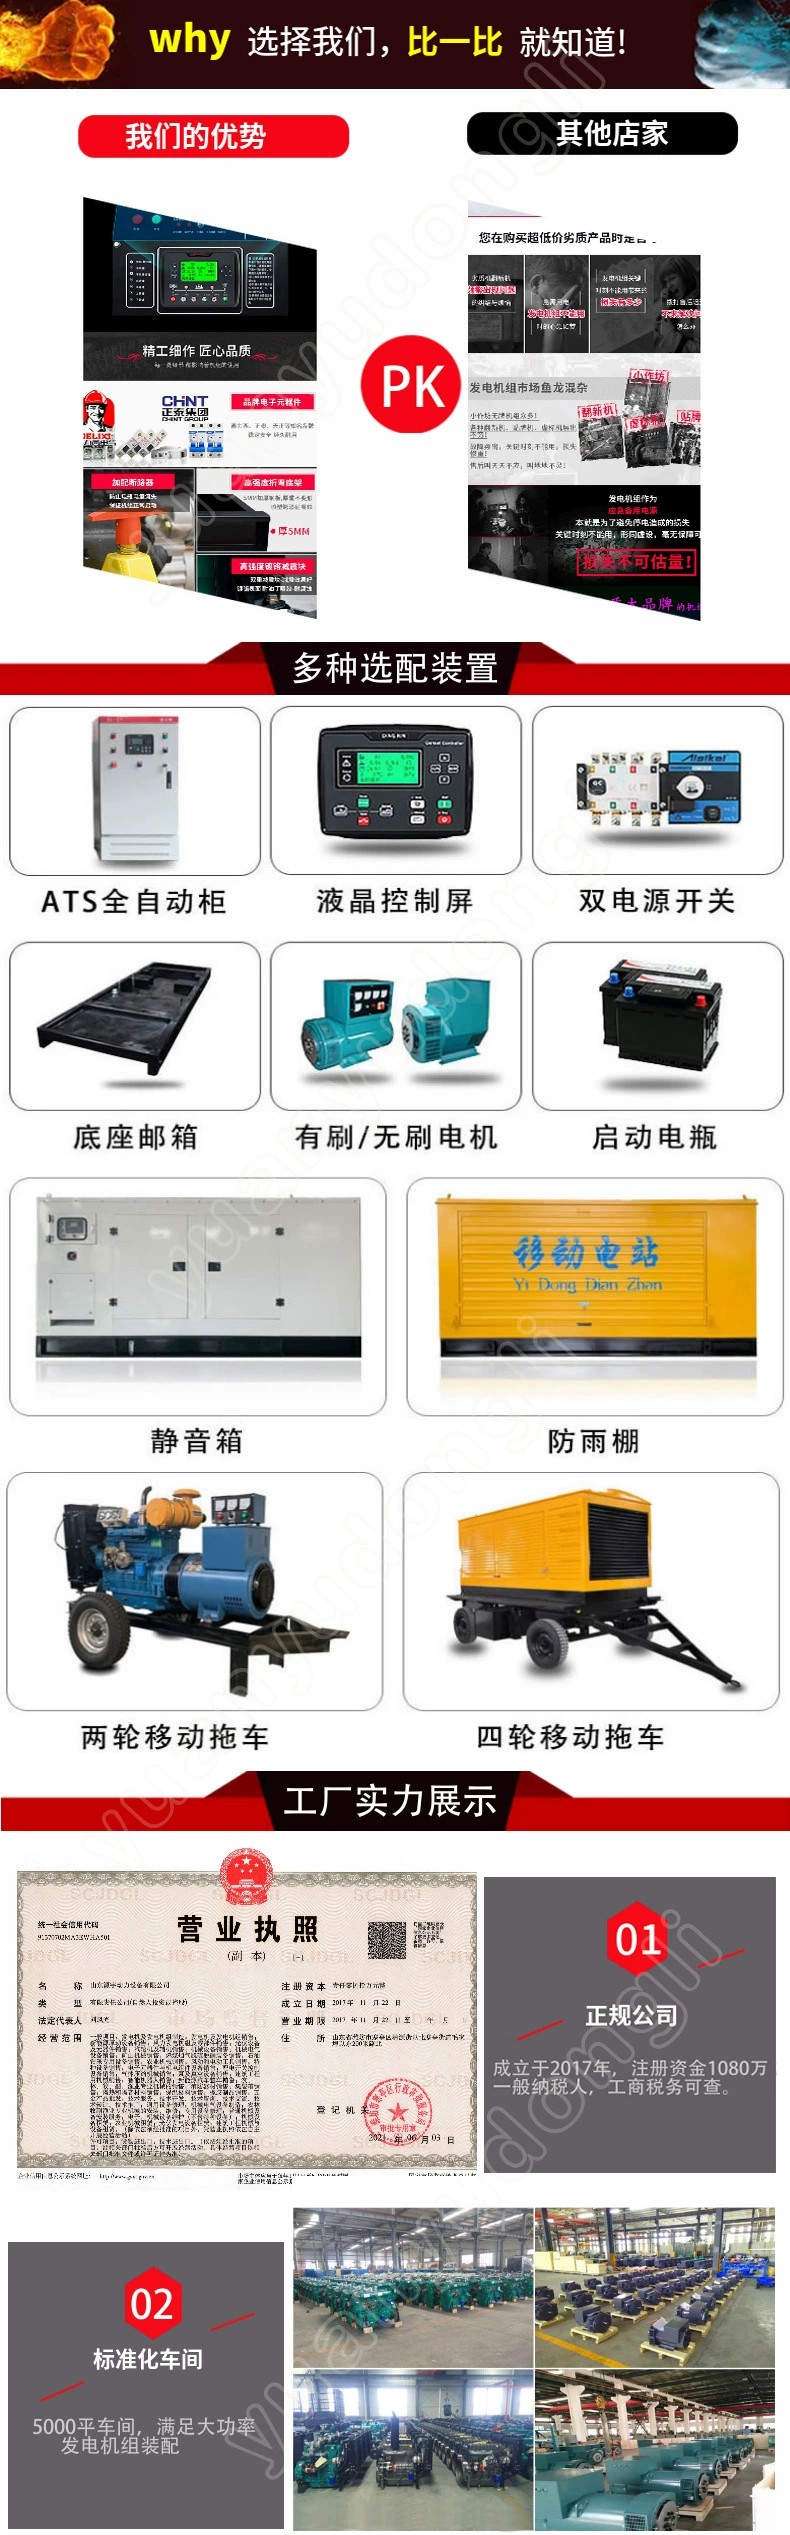 400kw Yuchai generator set YC6T600L-D22 YC6MJ600-D30 diesel engine bank backup power supply